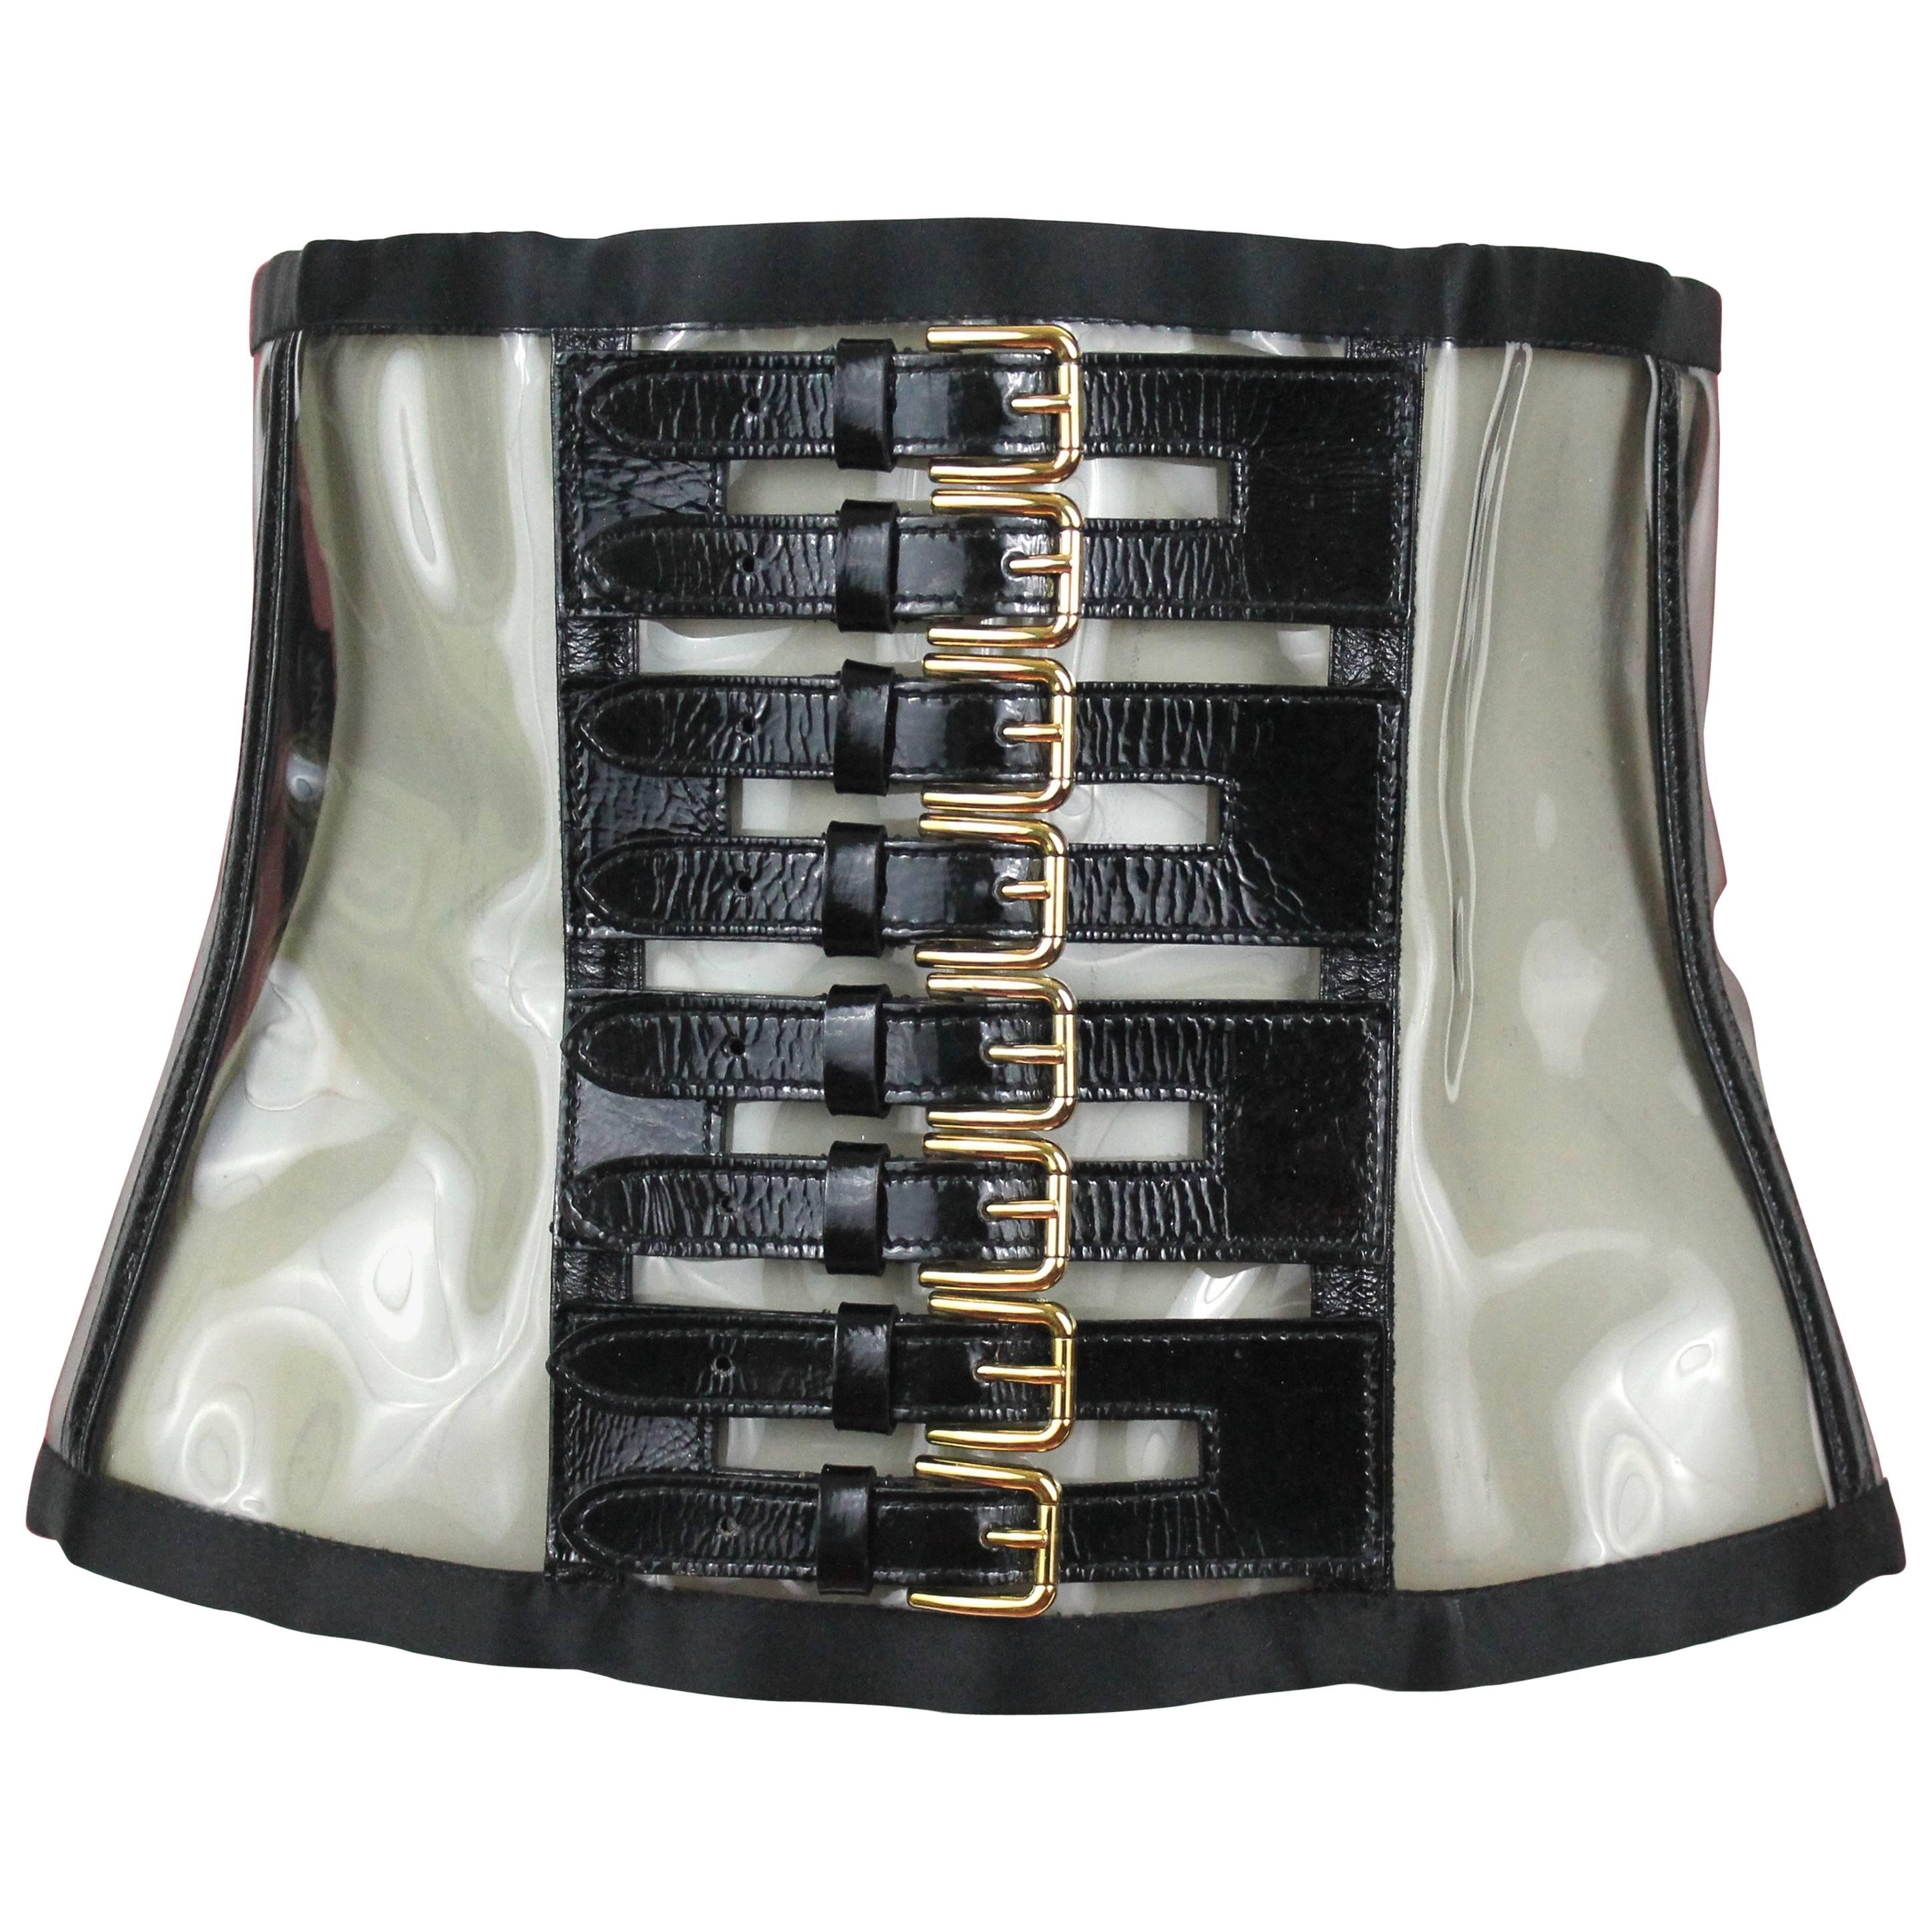 Dolce & Gabbana PVC & Leather Waist Cincher, S/S 2007, Size 24-27